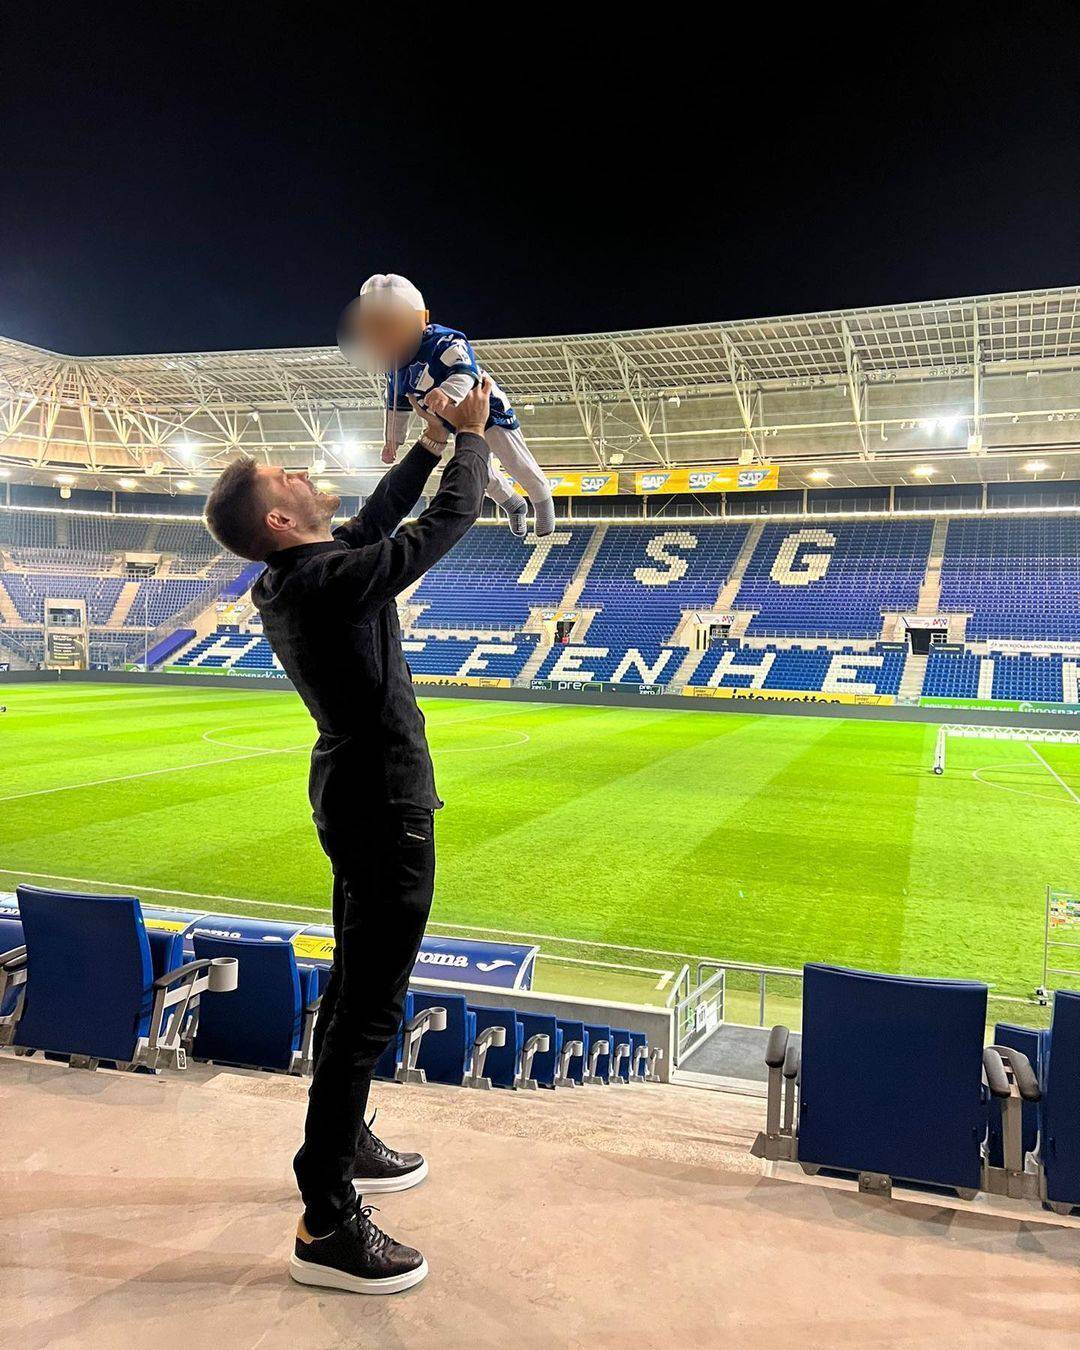 Rekorder Kramarić: Sin je prvi put bio na stadionu. Drago mi je da sam baš pred njim zabio...